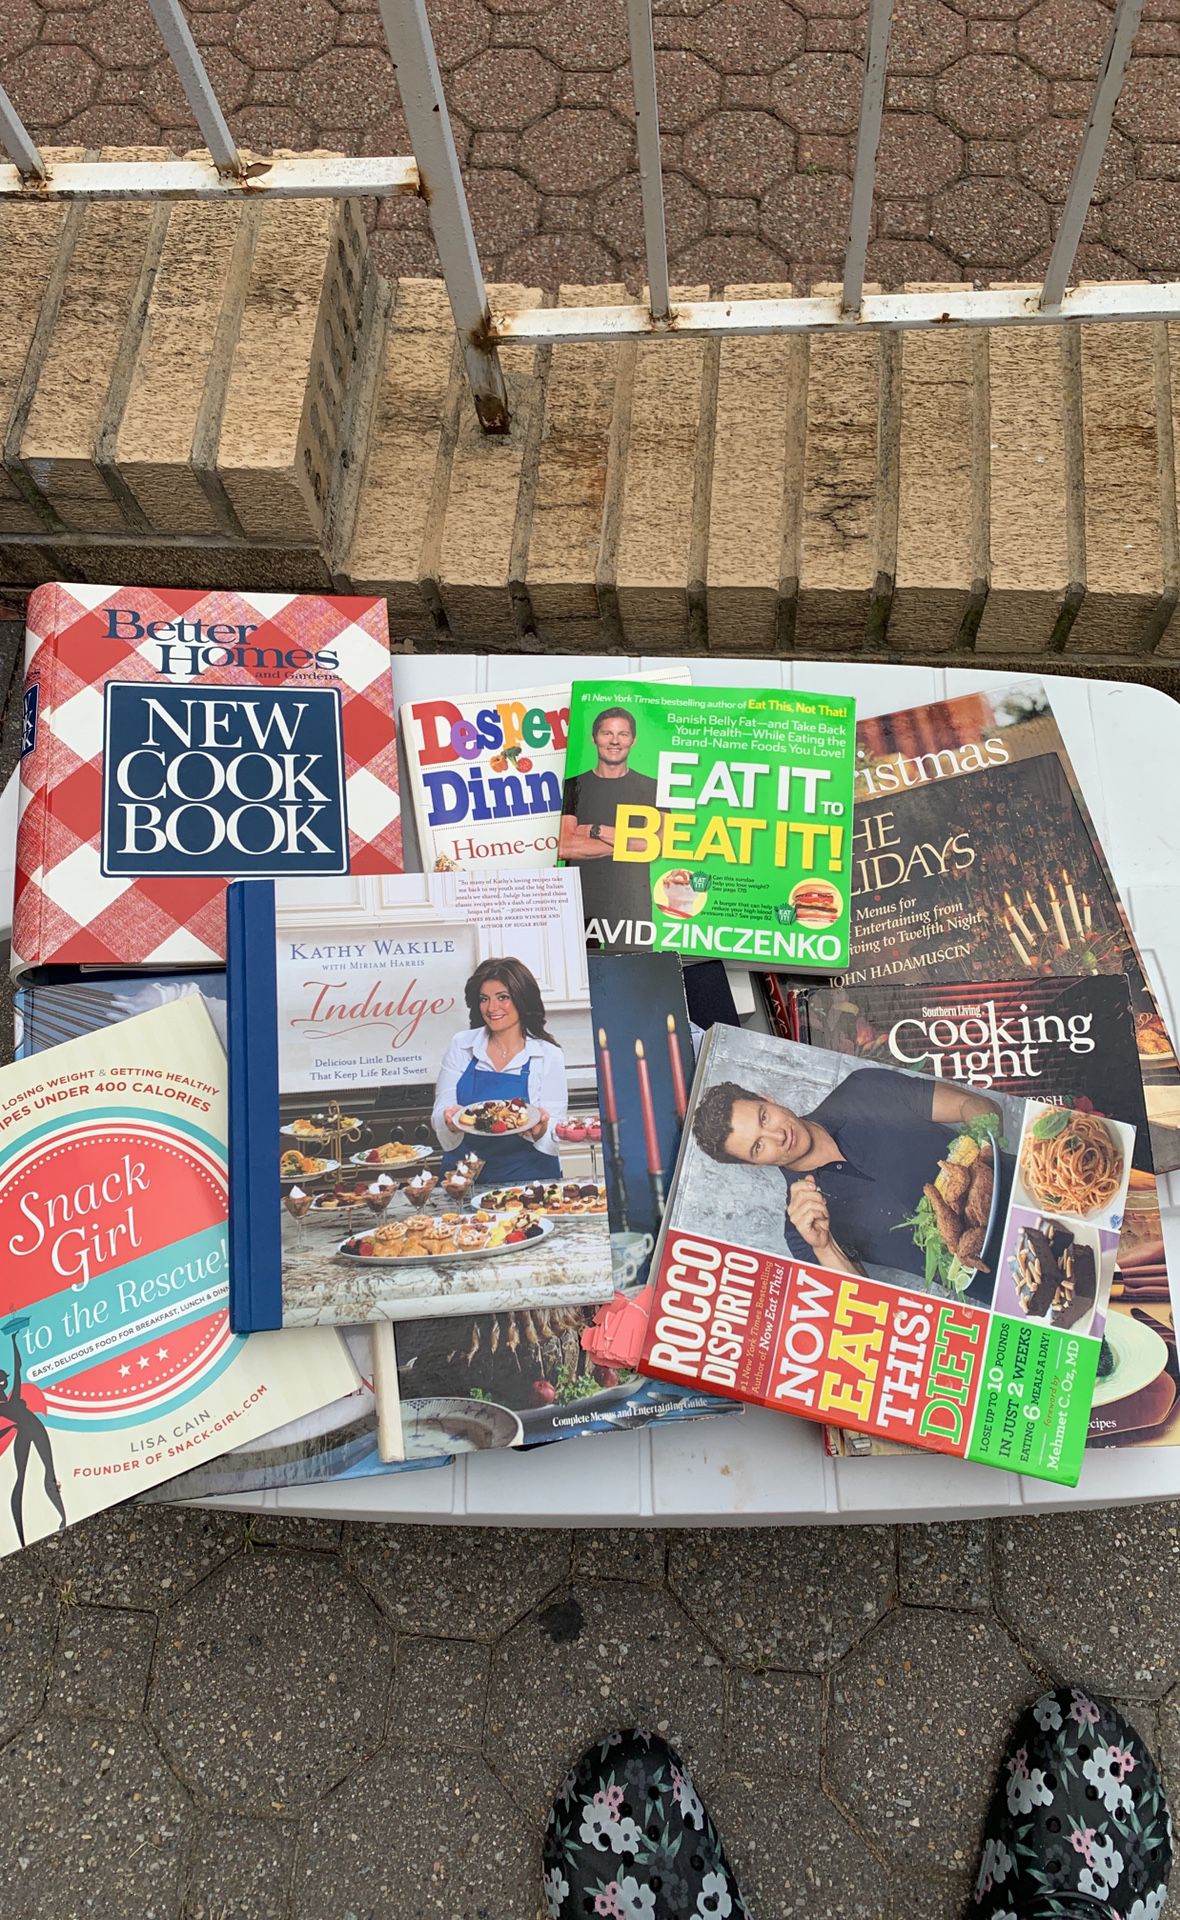 Free cookbooks and books